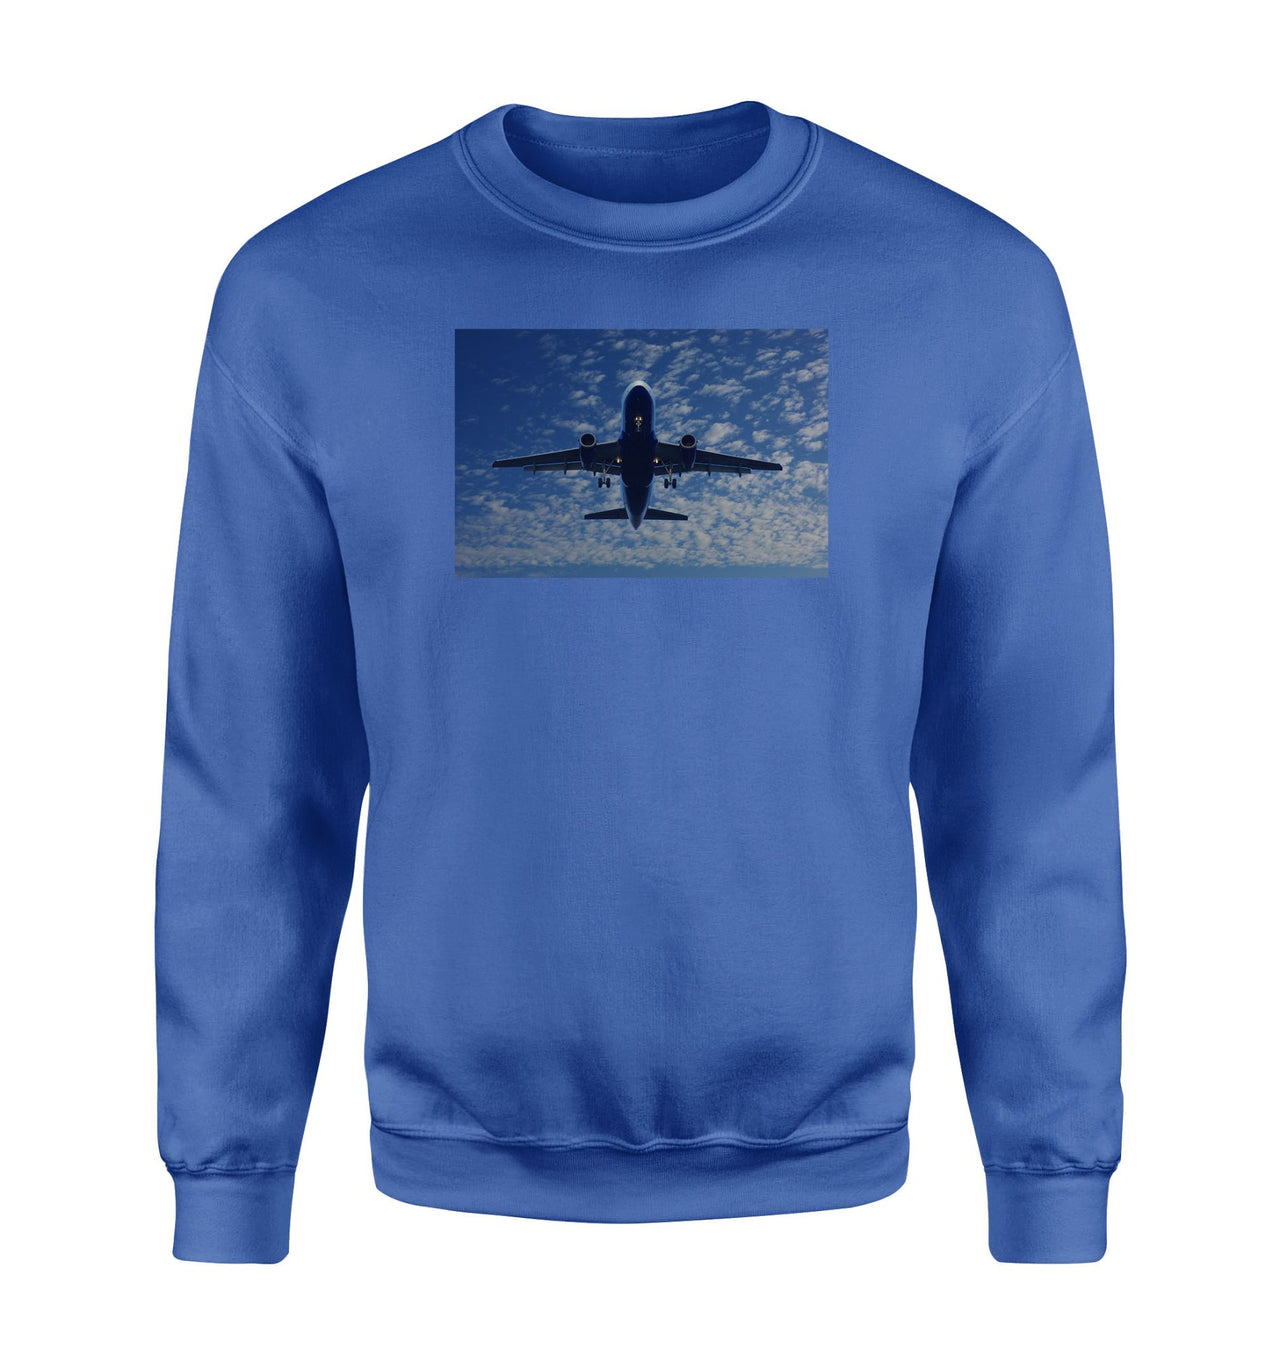 Airplane From Below Designed Sweatshirts